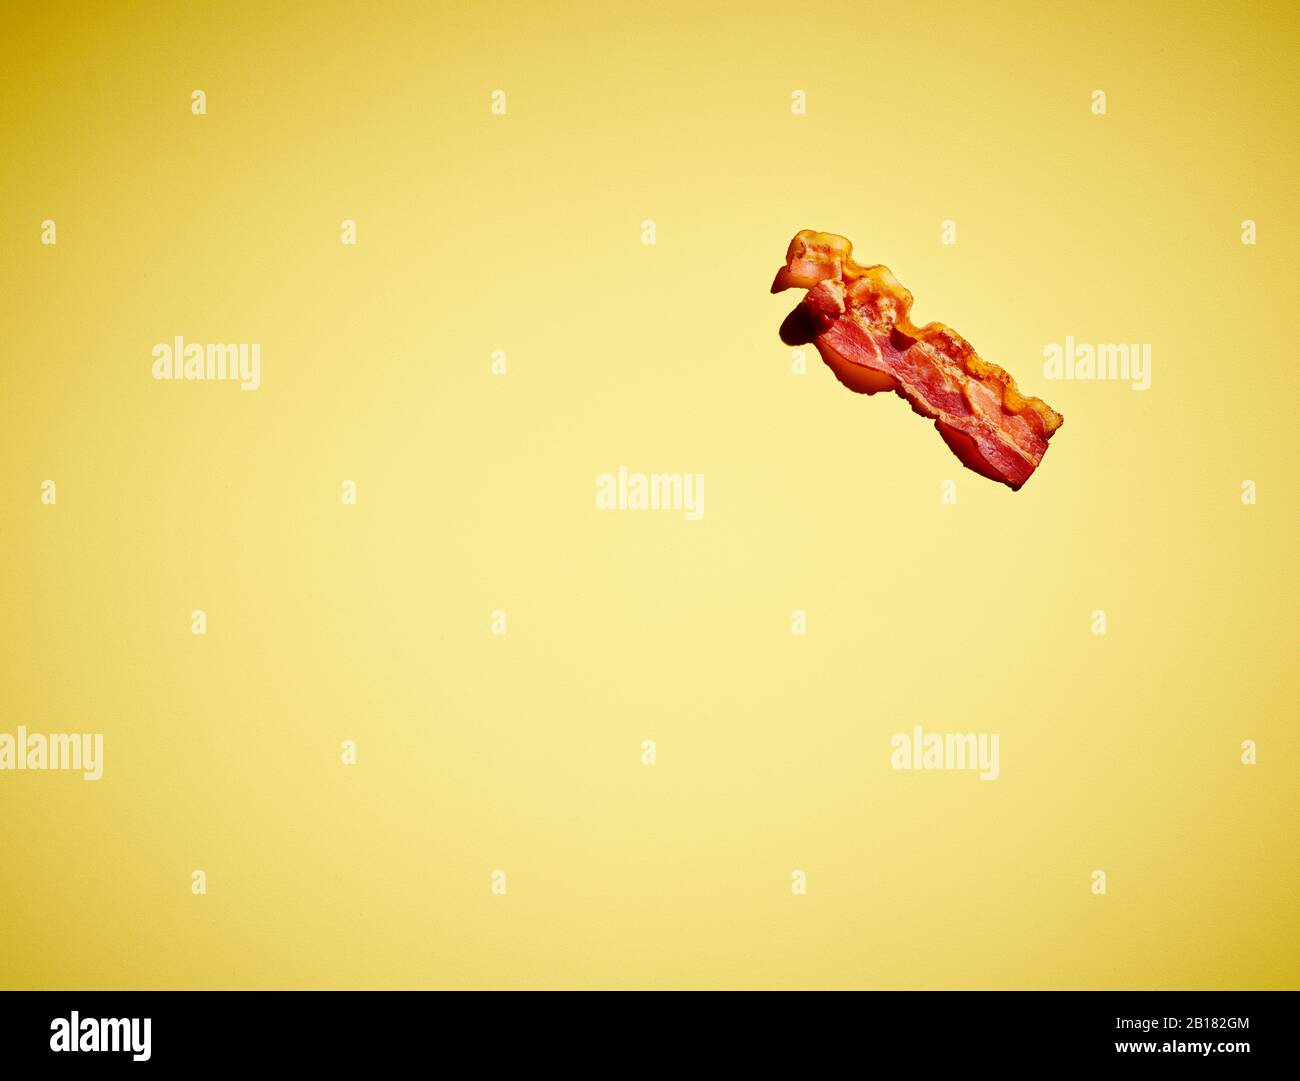 Studio shot of single bacon strip against yellow background Stock Photo